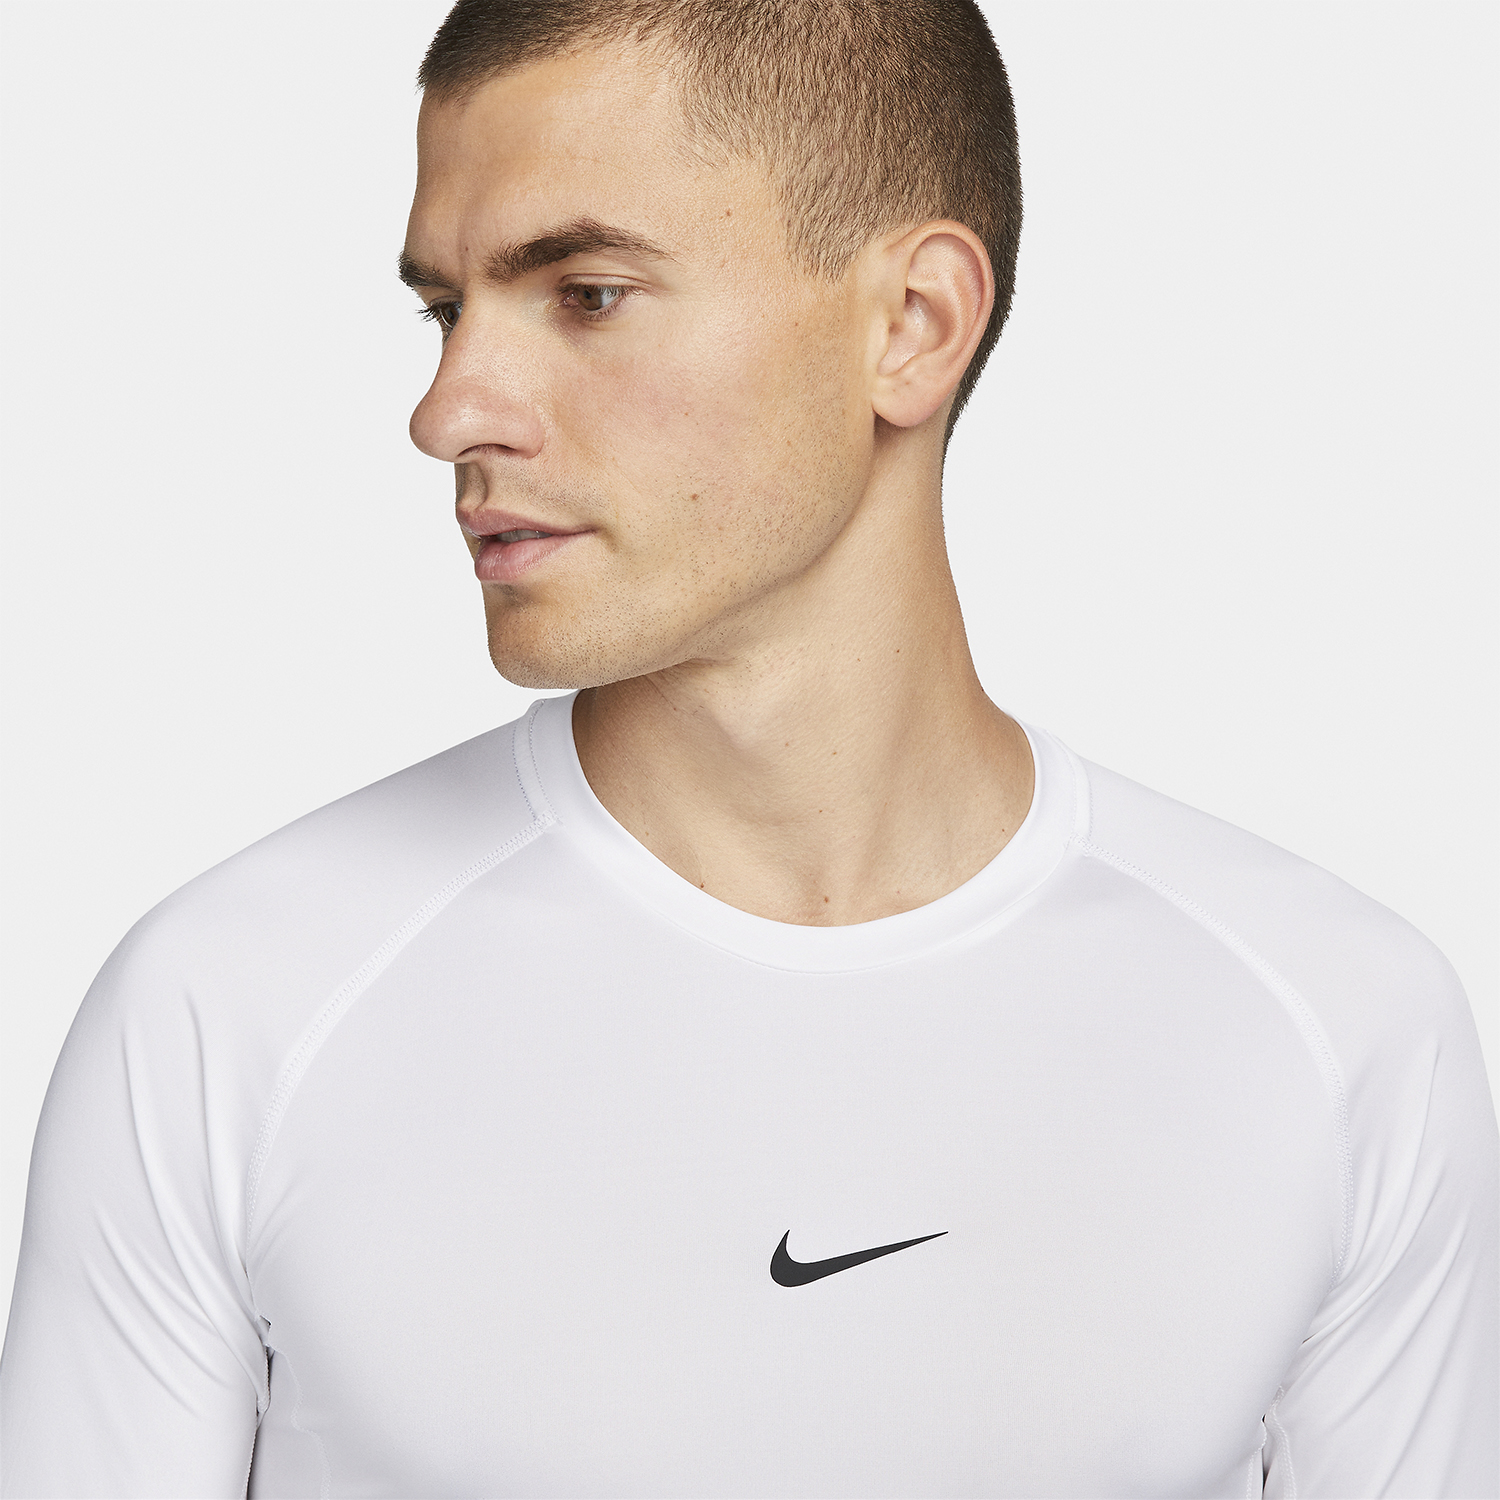 Nike Dri-FIT Logo Shirt - White/Black